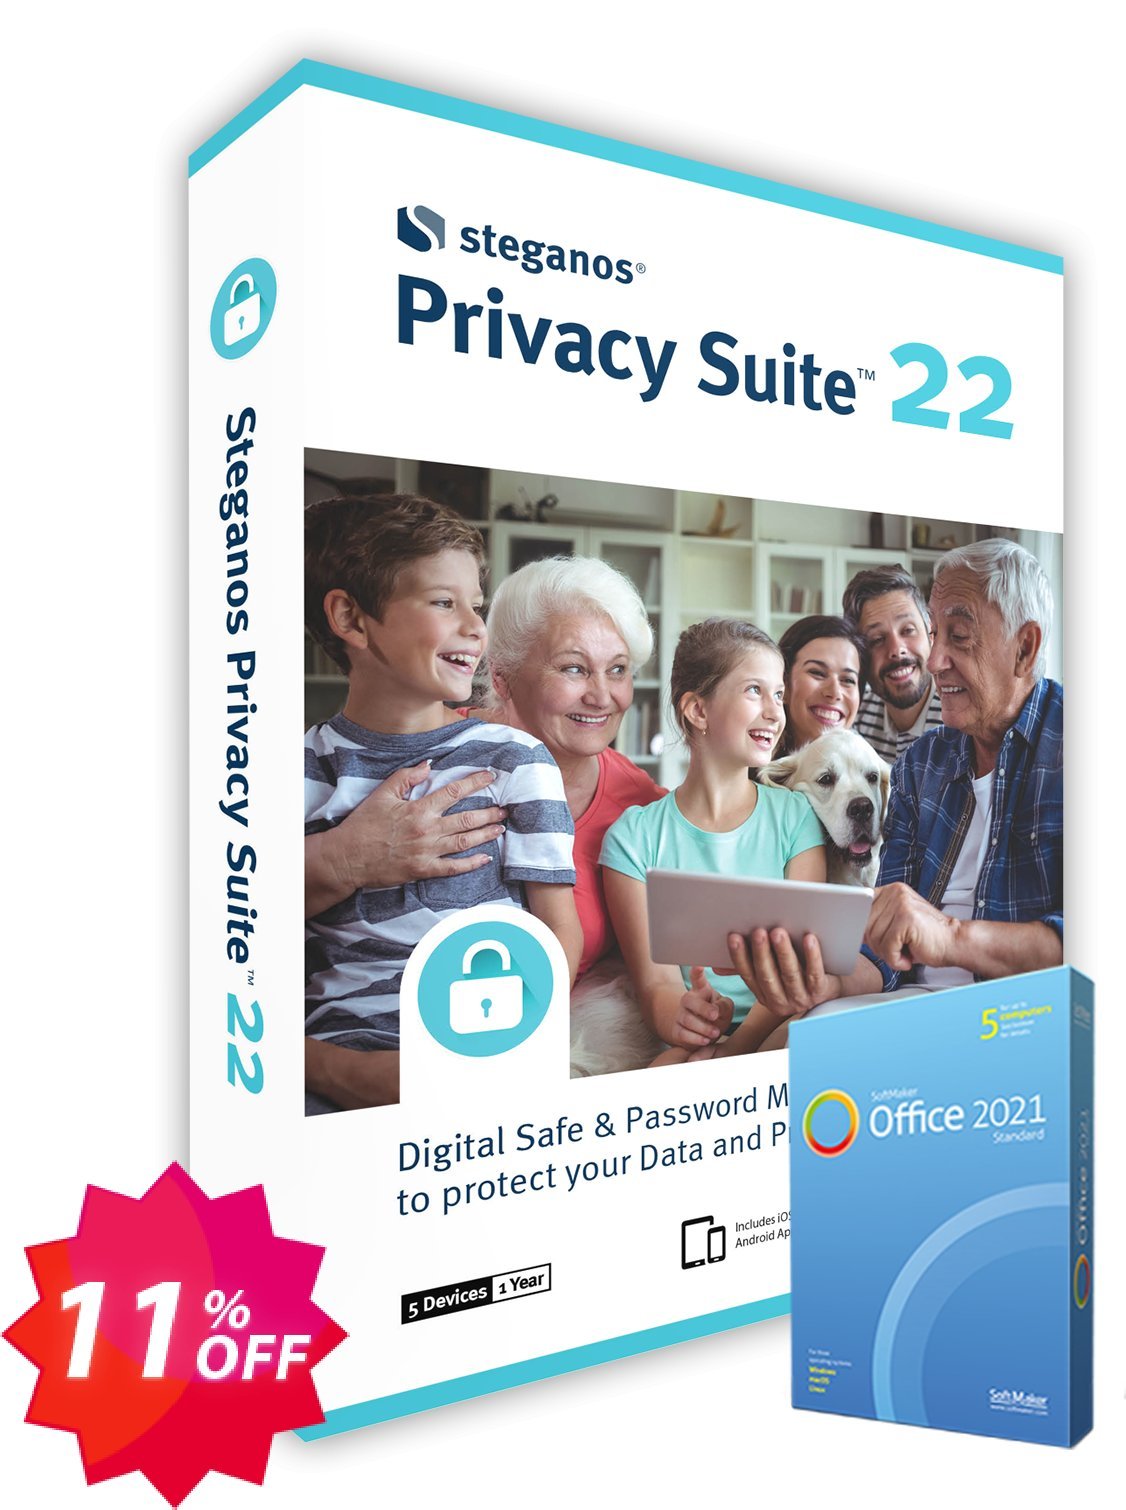 Steganos Privacy Suite 22 Coupon code 11% discount 